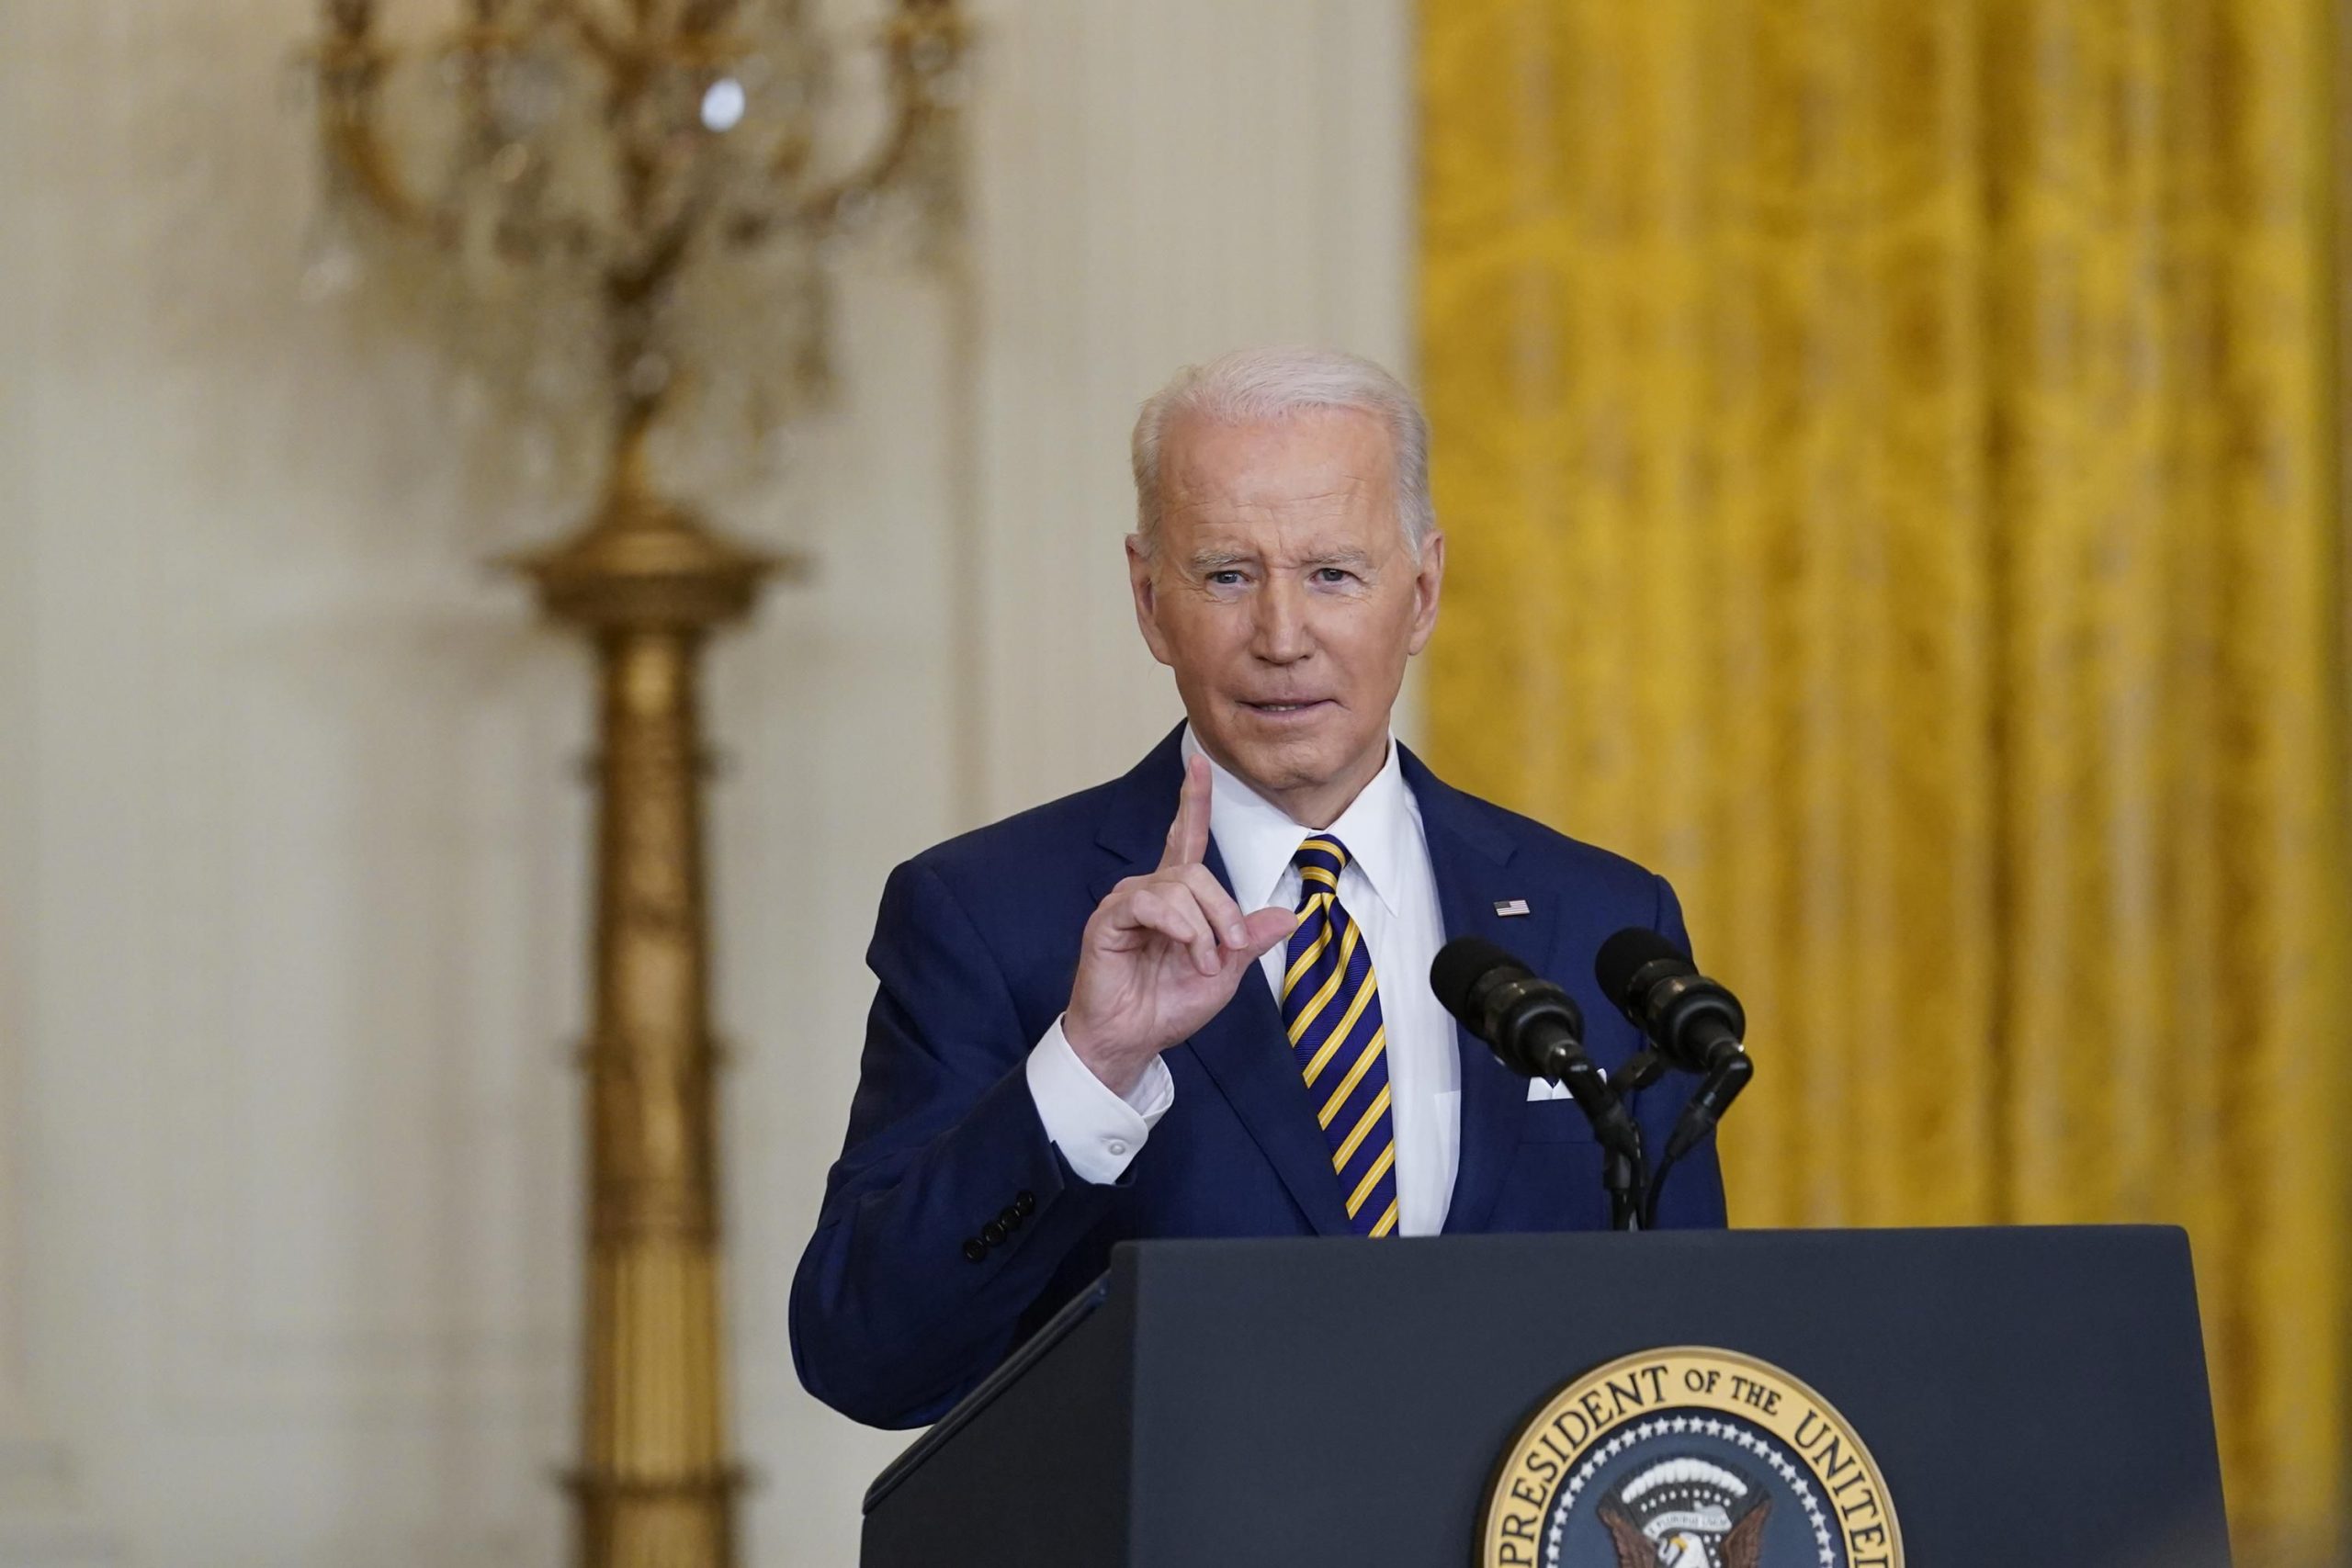 ‘I’m coming in stronger’: Joe Biden on meeting with Xi Jinping after Democrats retain Senate control